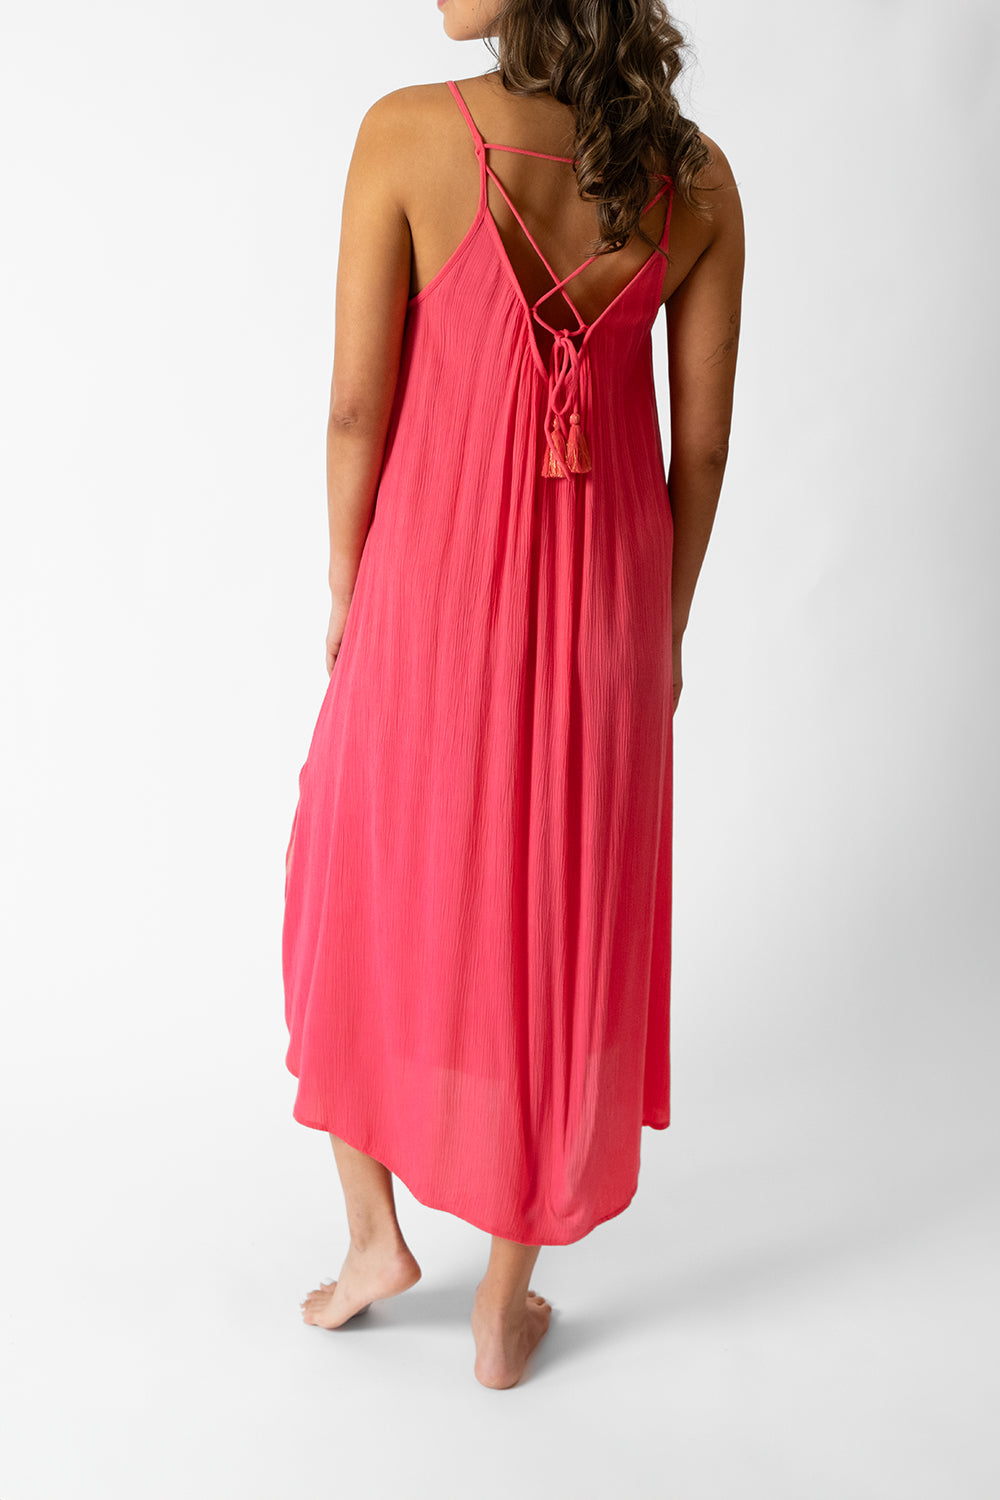 koy resort miami strappy side slit midi dress in guava pink